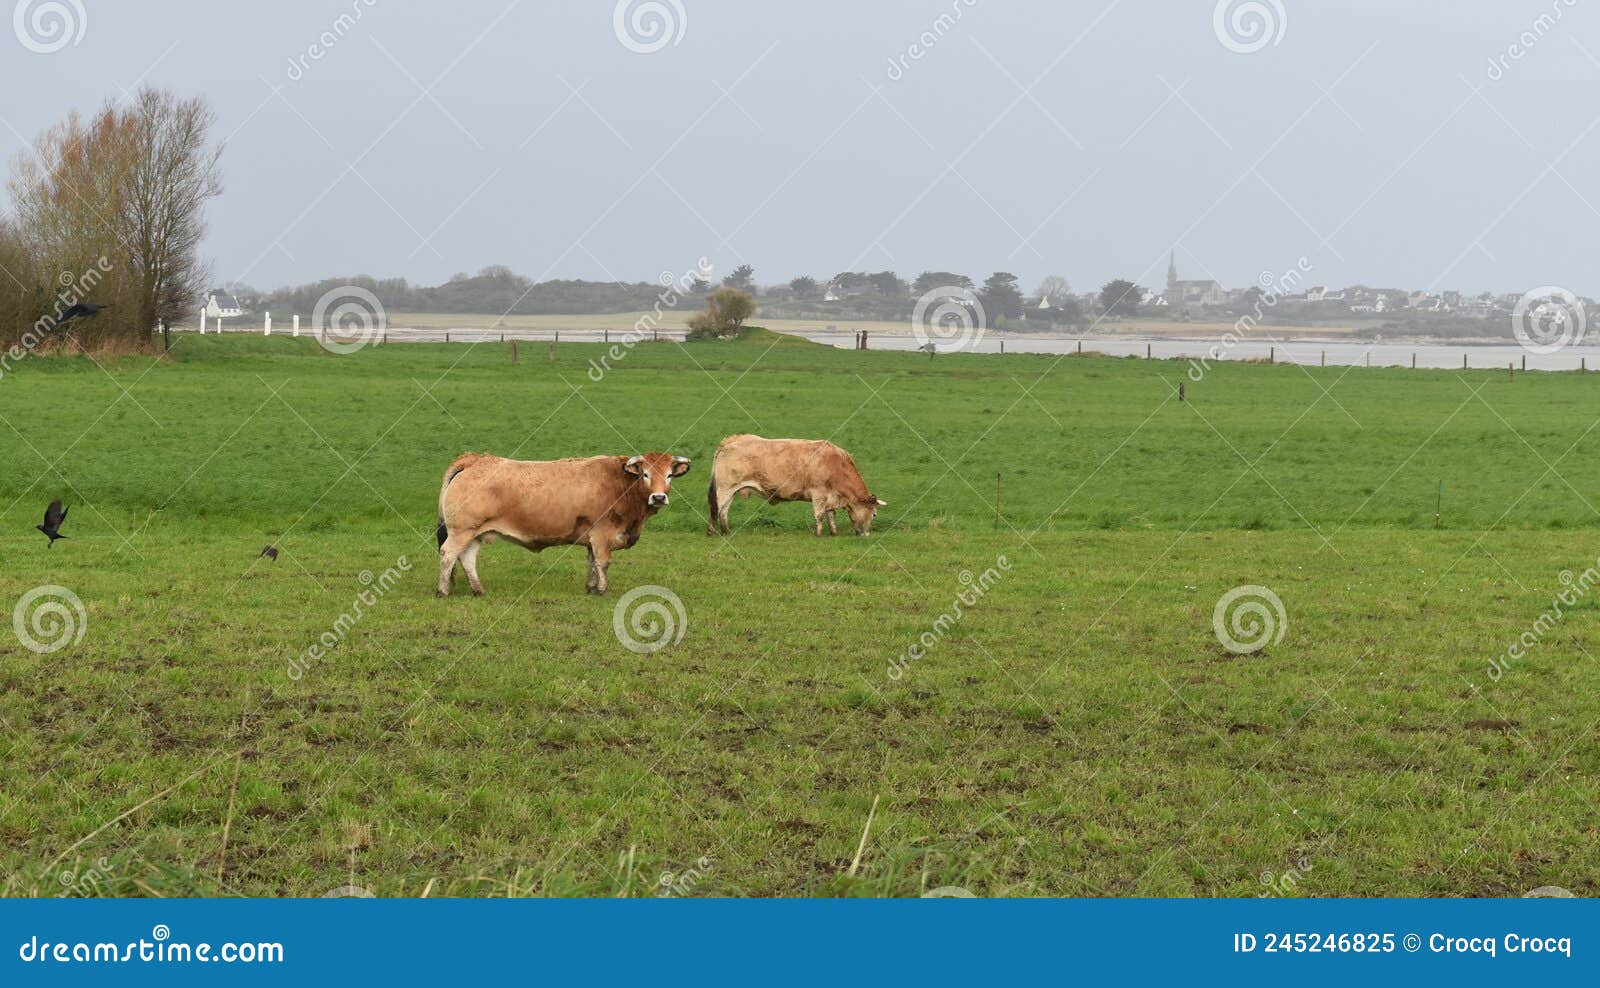 purebread bull called aubrac in a meadow near the sea in france